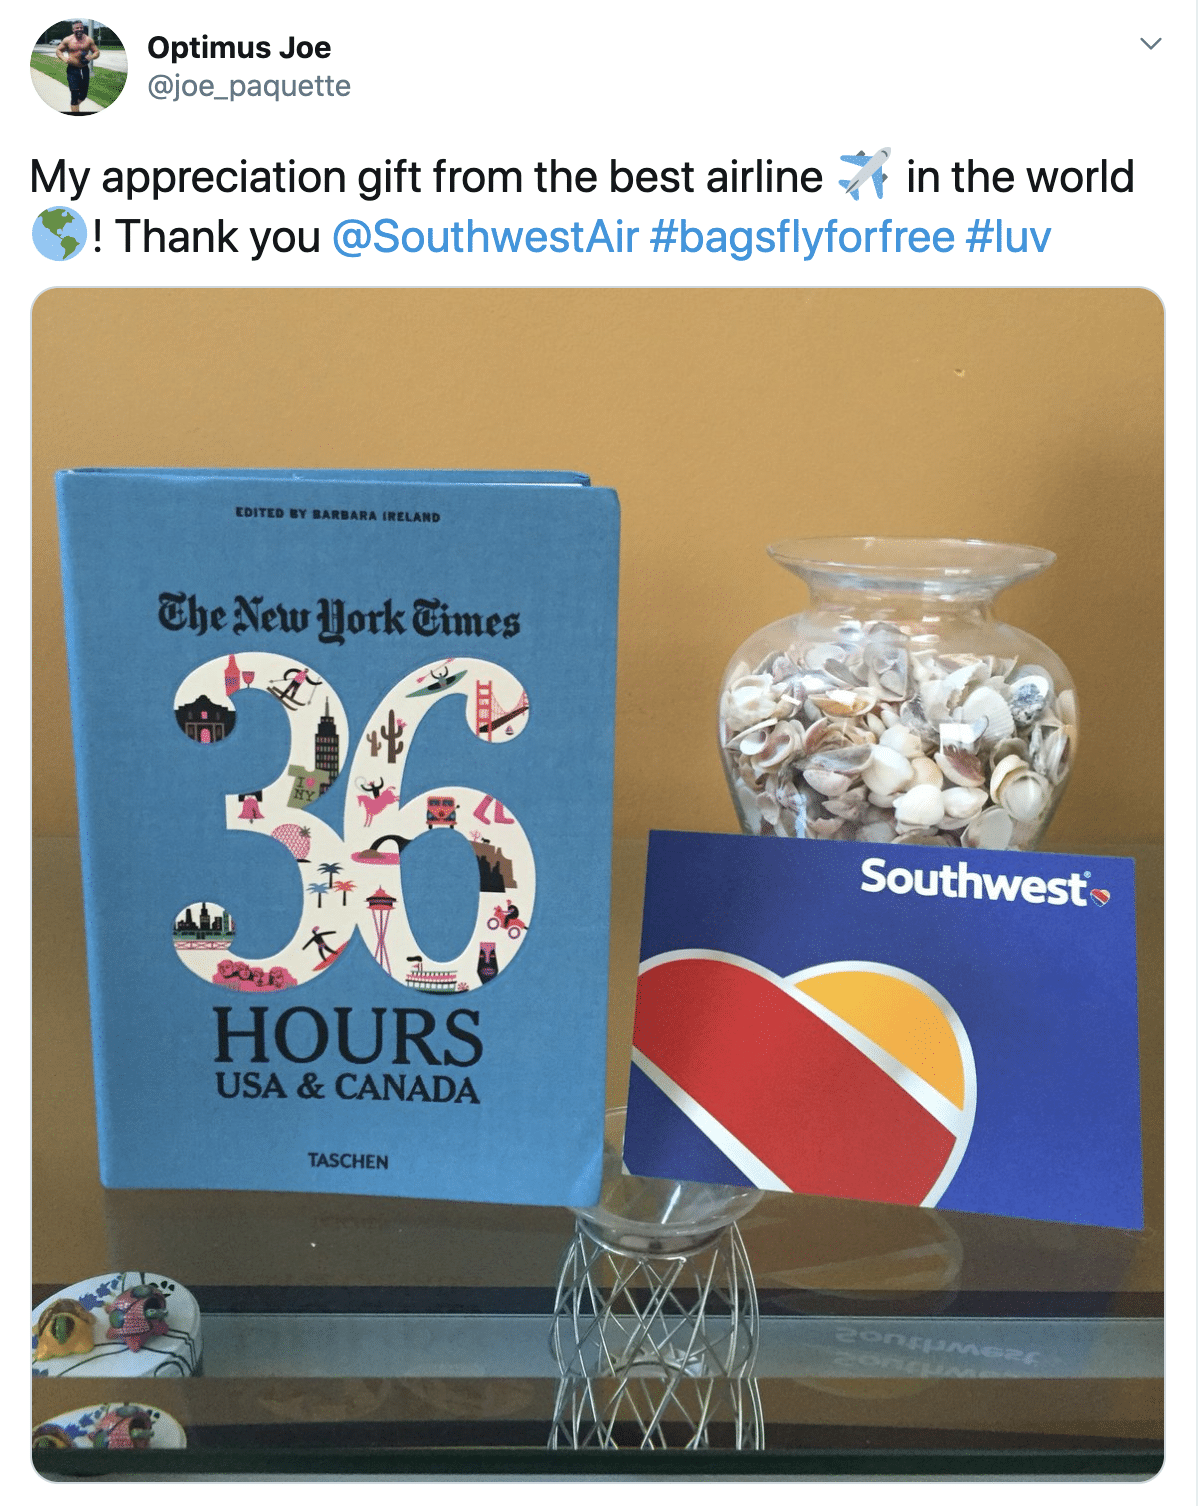 Southwest Airlines rewarding engagement